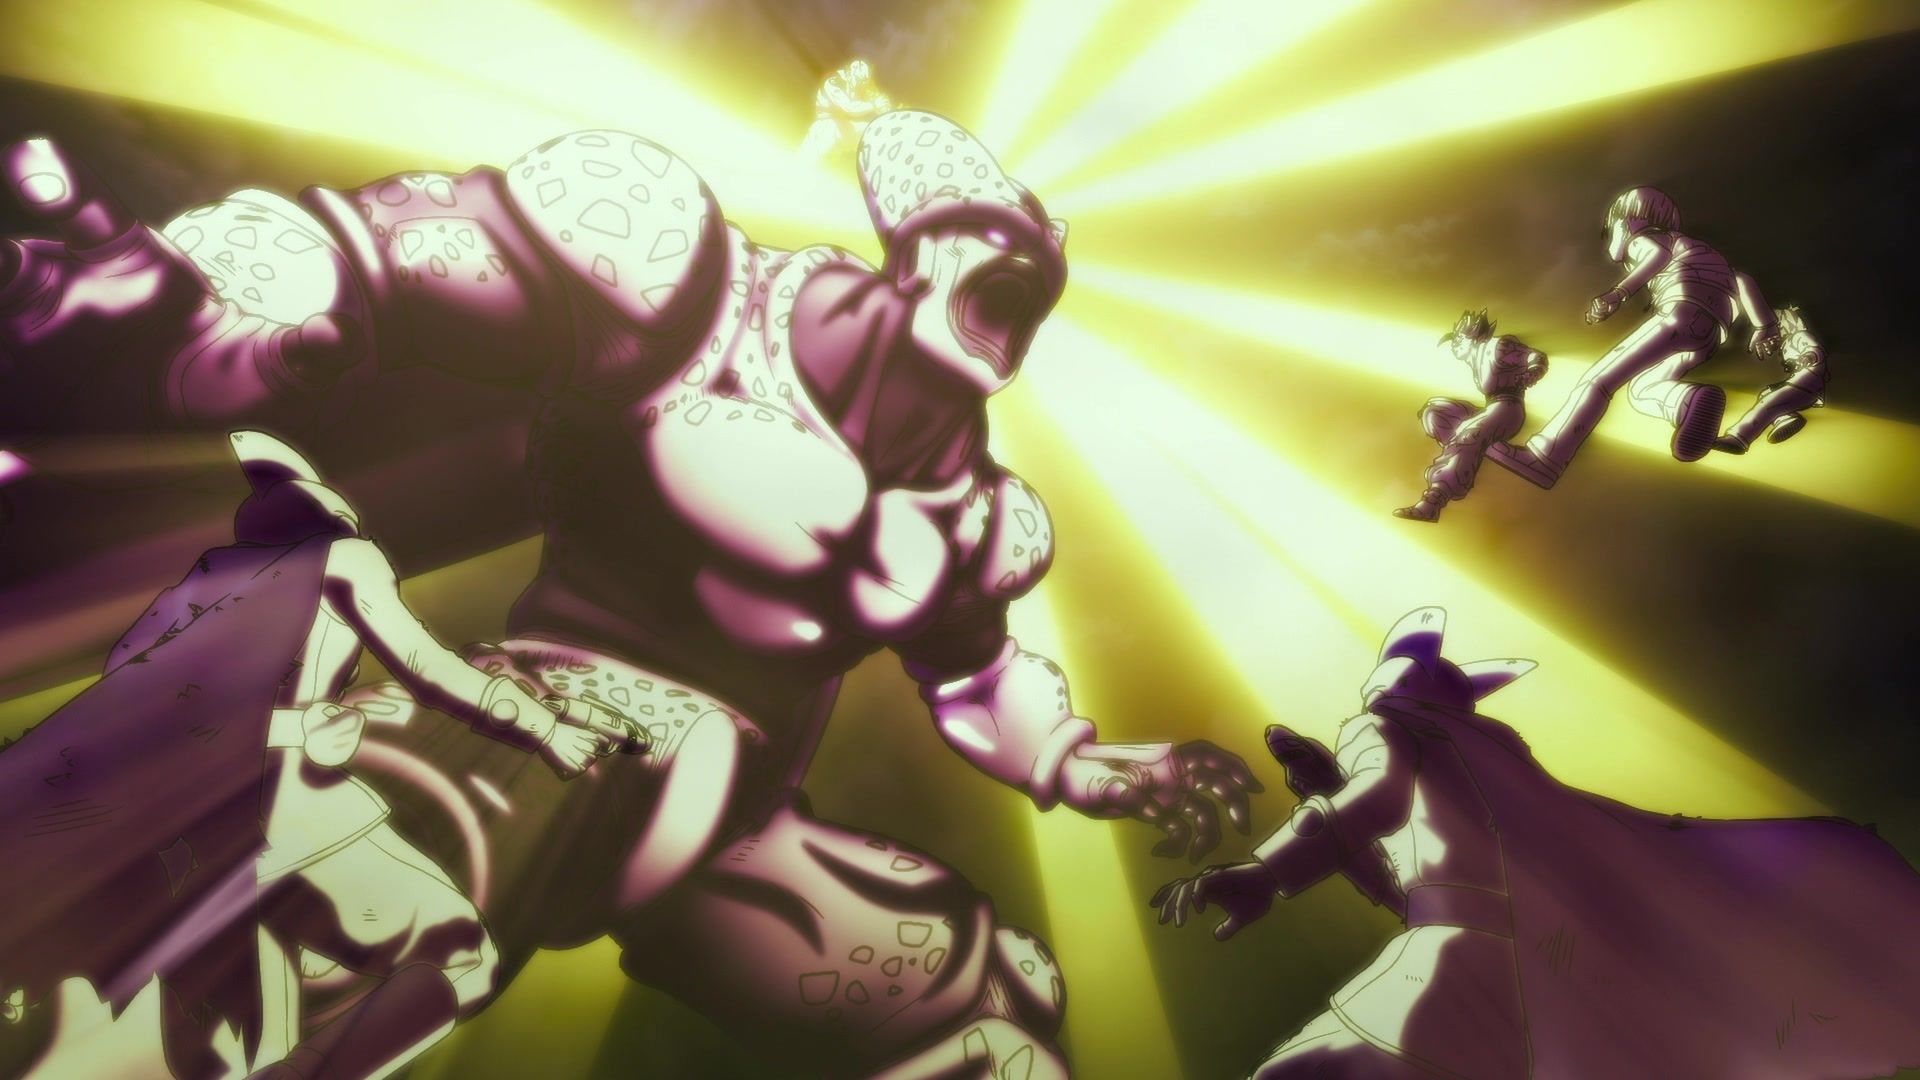 Dragon Ball представляет редкий концепт-арт Super Heroes Cell Max vs. Gamma 2 Fight